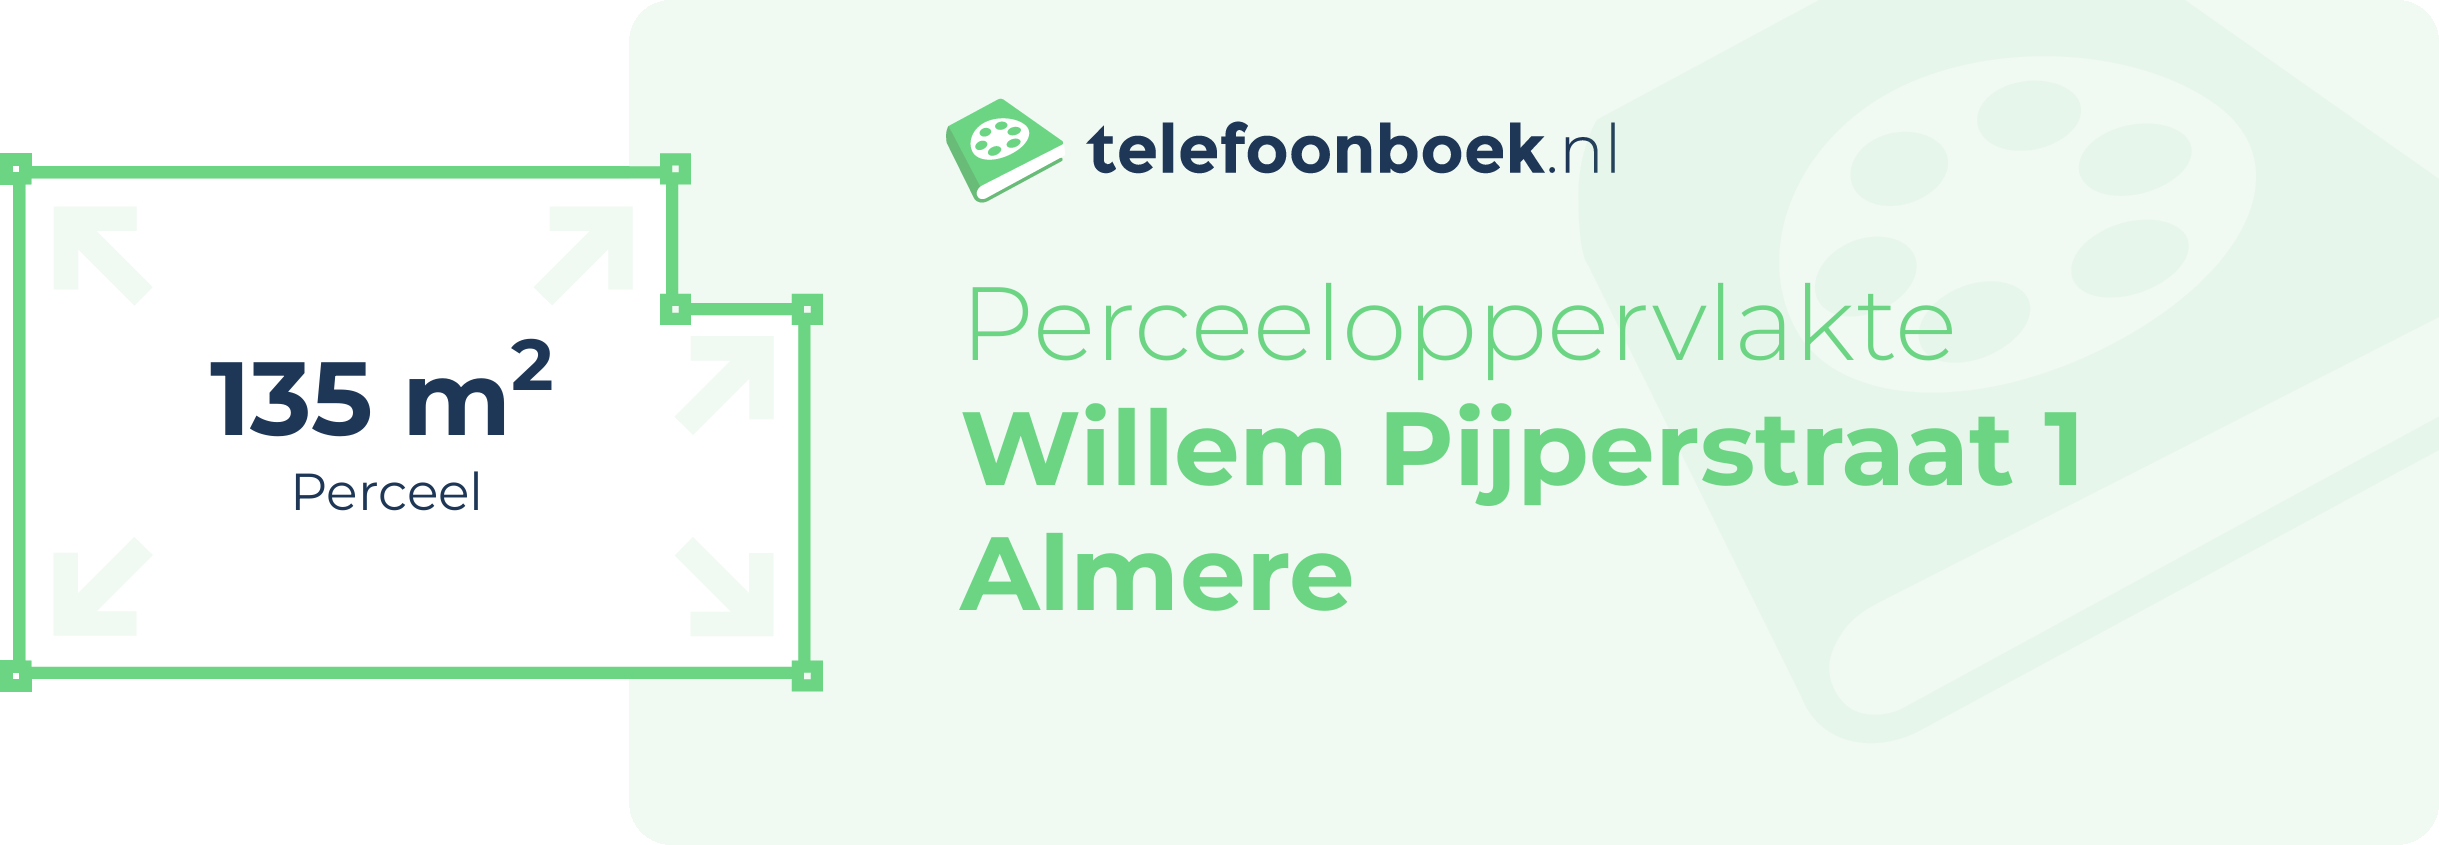 Perceeloppervlakte Willem Pijperstraat 1 Almere